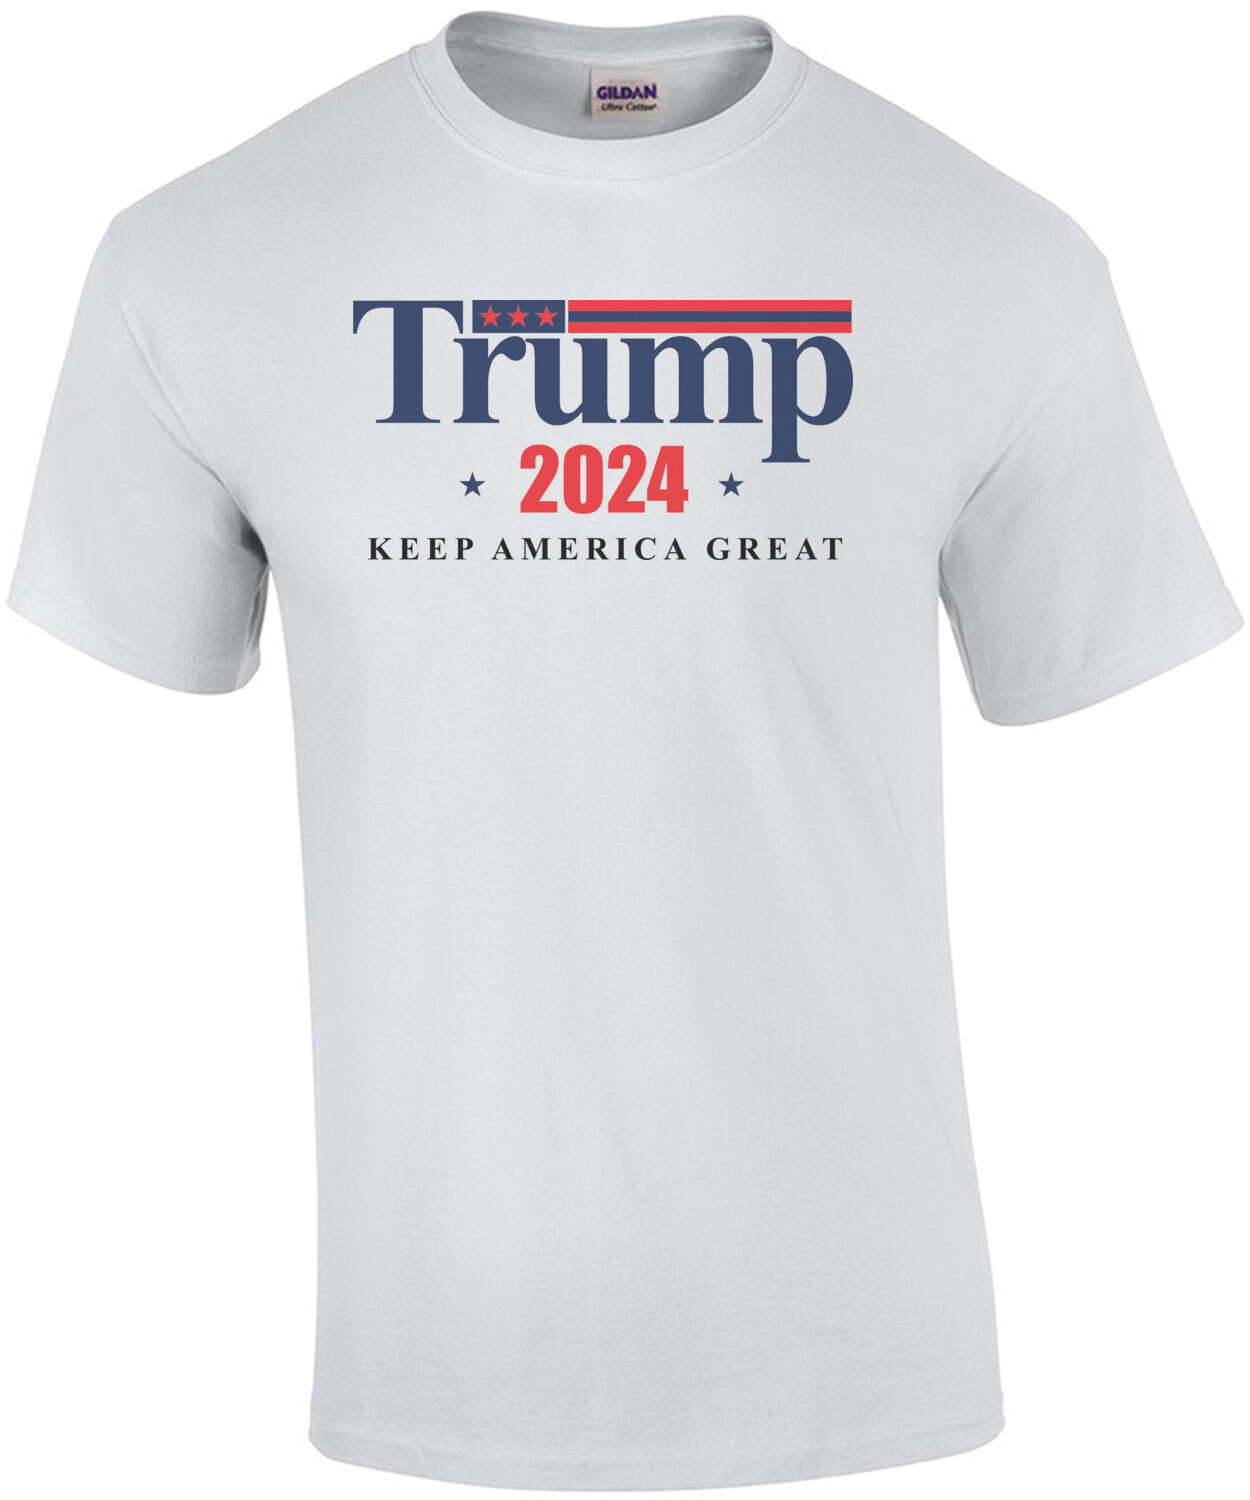 Trump 2024 - Keep America Great - Pro Trump 2024 Election - Conservative Republican T-Shirt